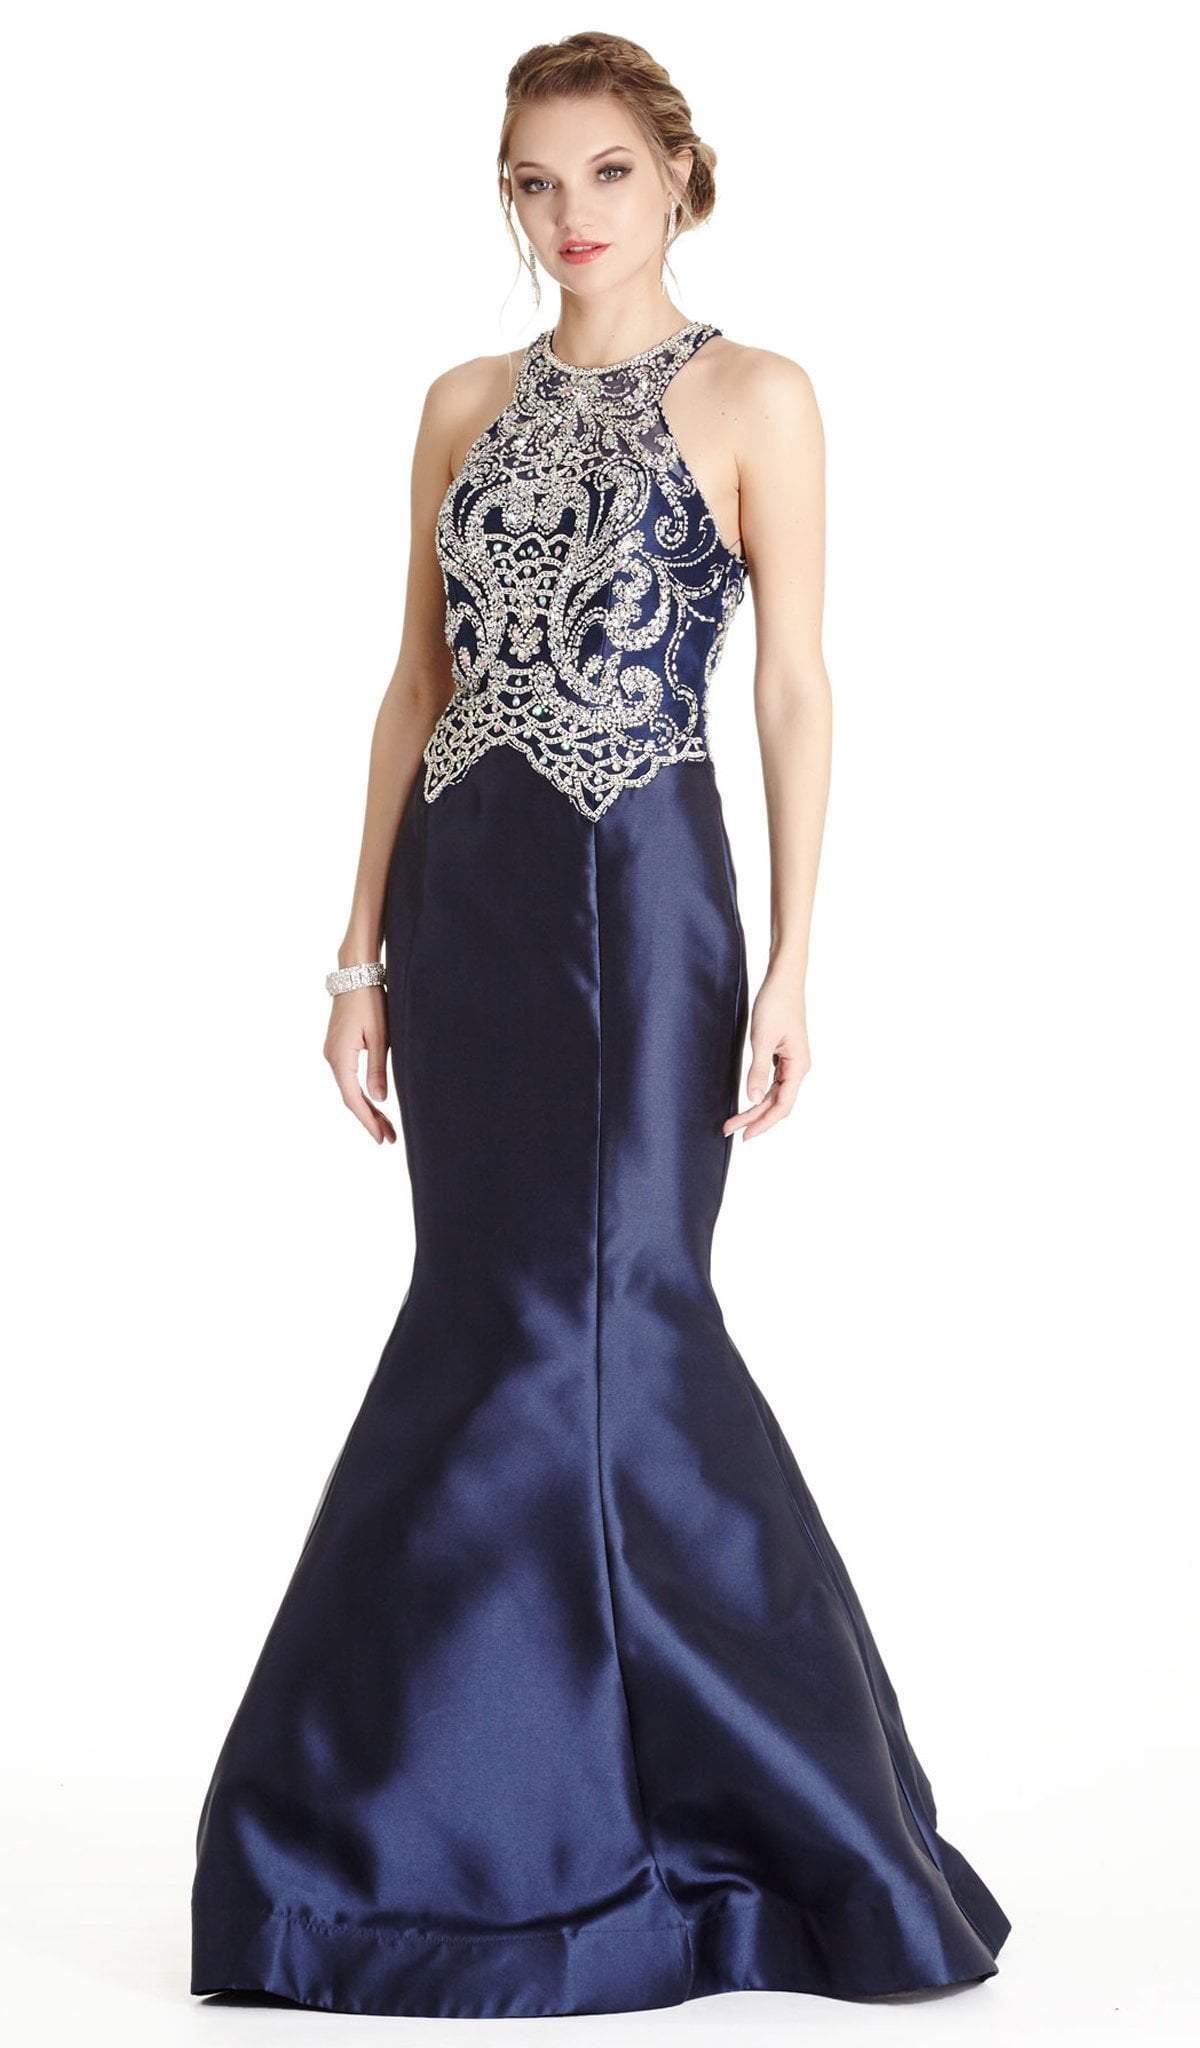 Aspeed Design - Bedazzled Halter Mermaid Evening Dress
